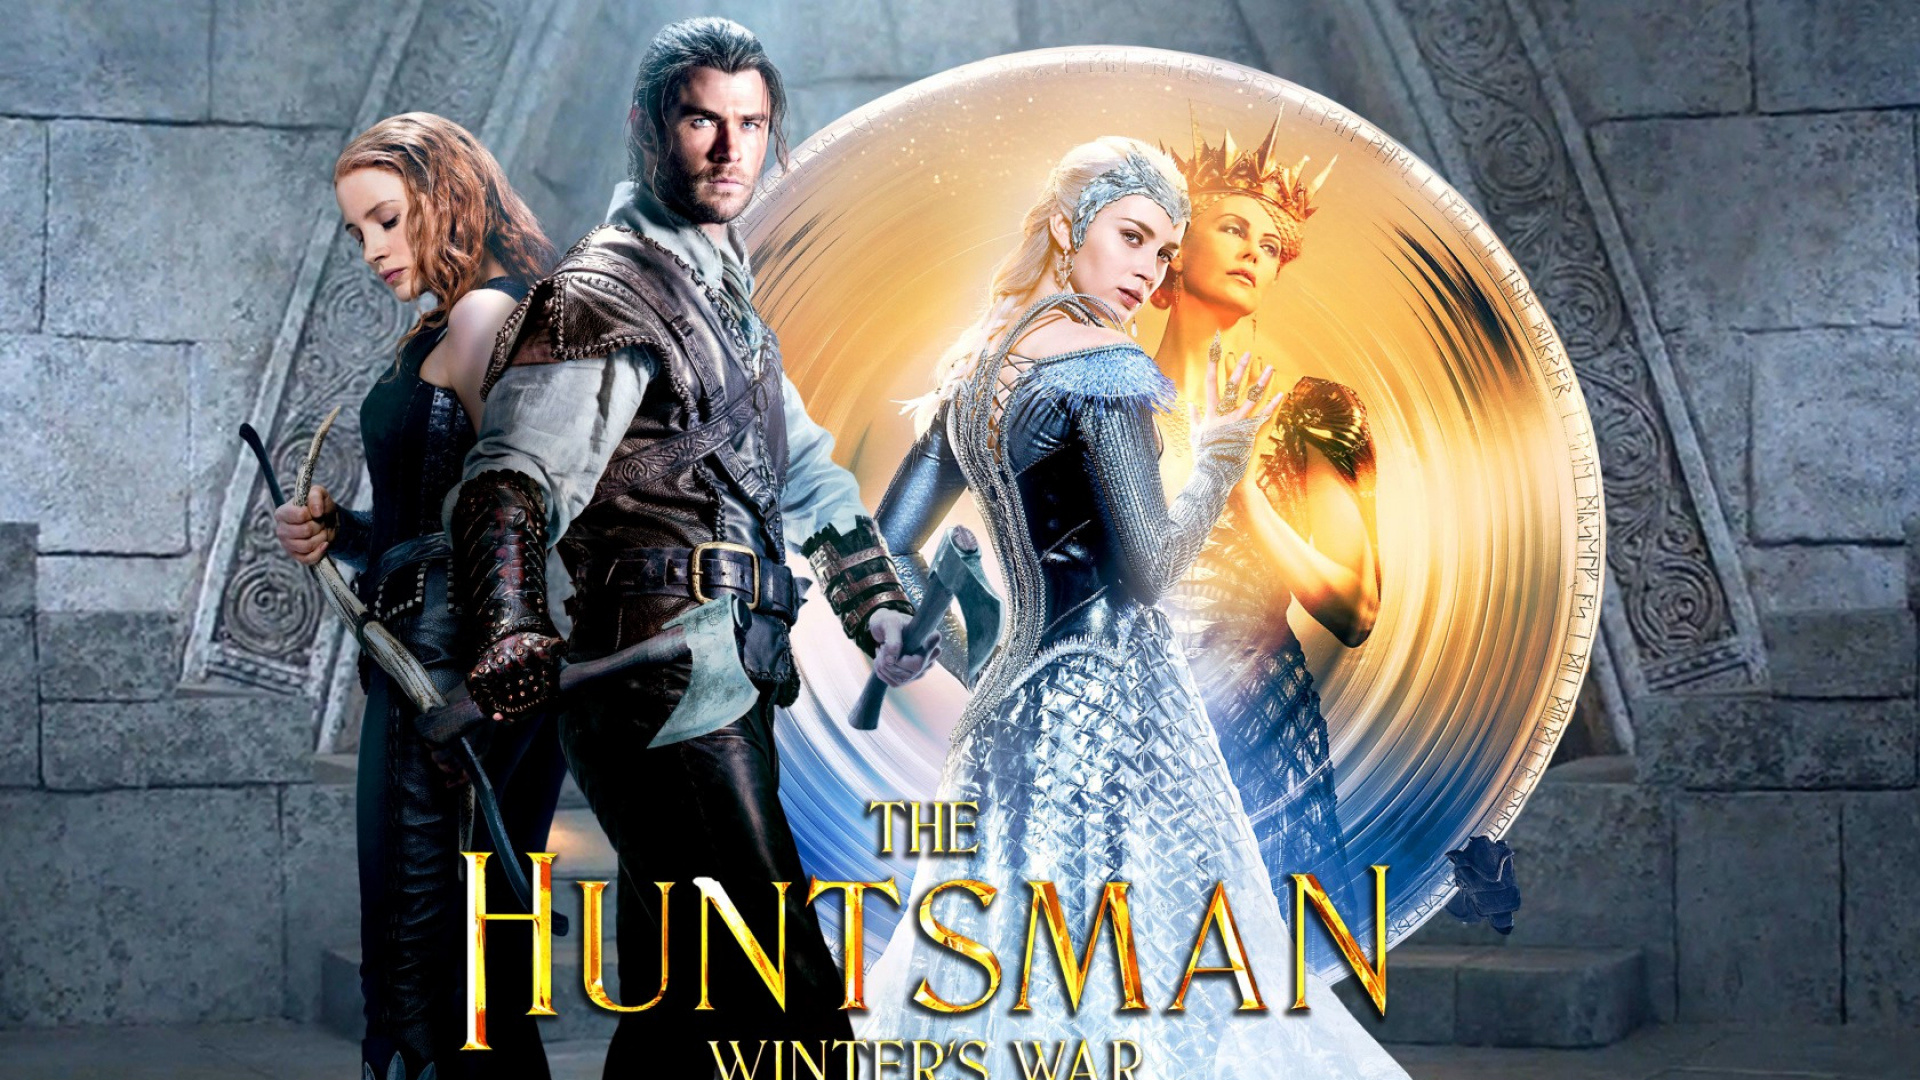 Chris Hemsworth, Huntsman, Movie poster, The Huntsman: Winter's War, 1920x1080 Full HD Desktop